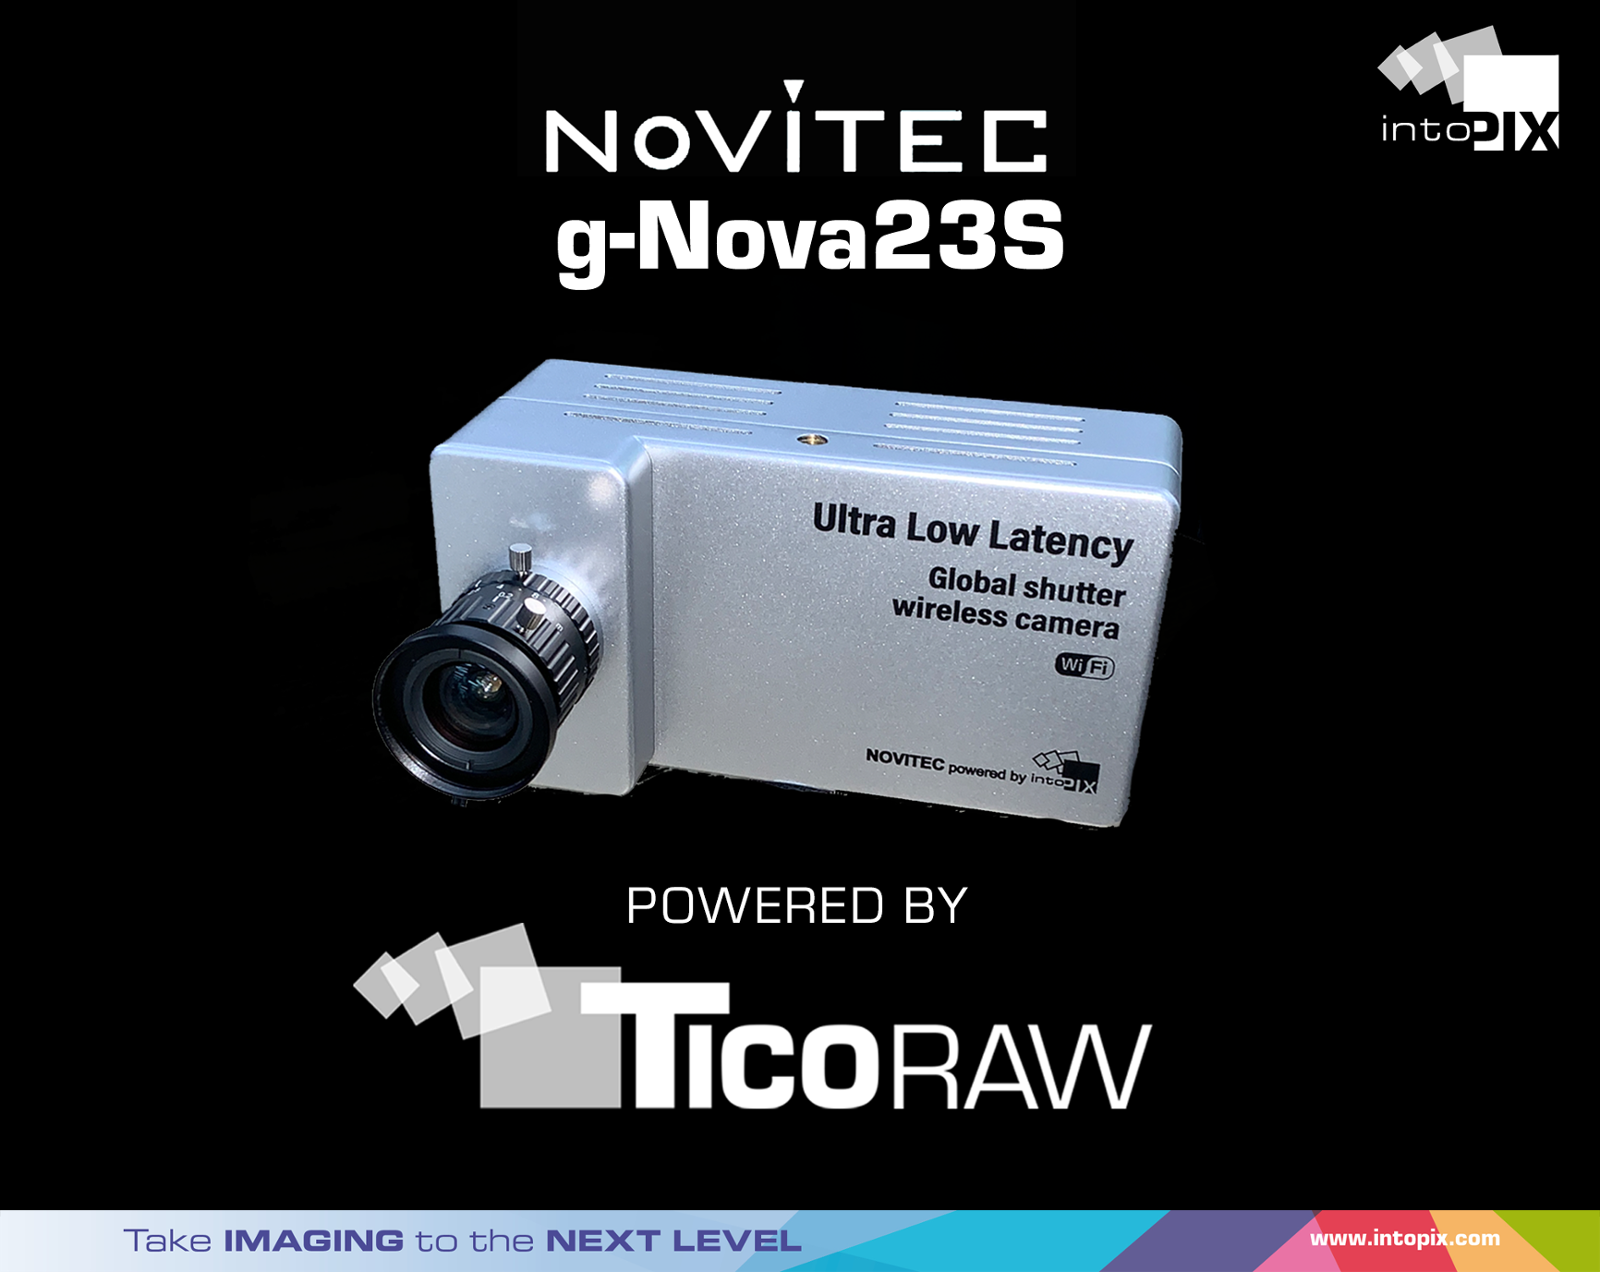 intoPIX, 노비텍의 새로운 산업용 카메라 포트폴리오에 TicoRAW 통합 발표